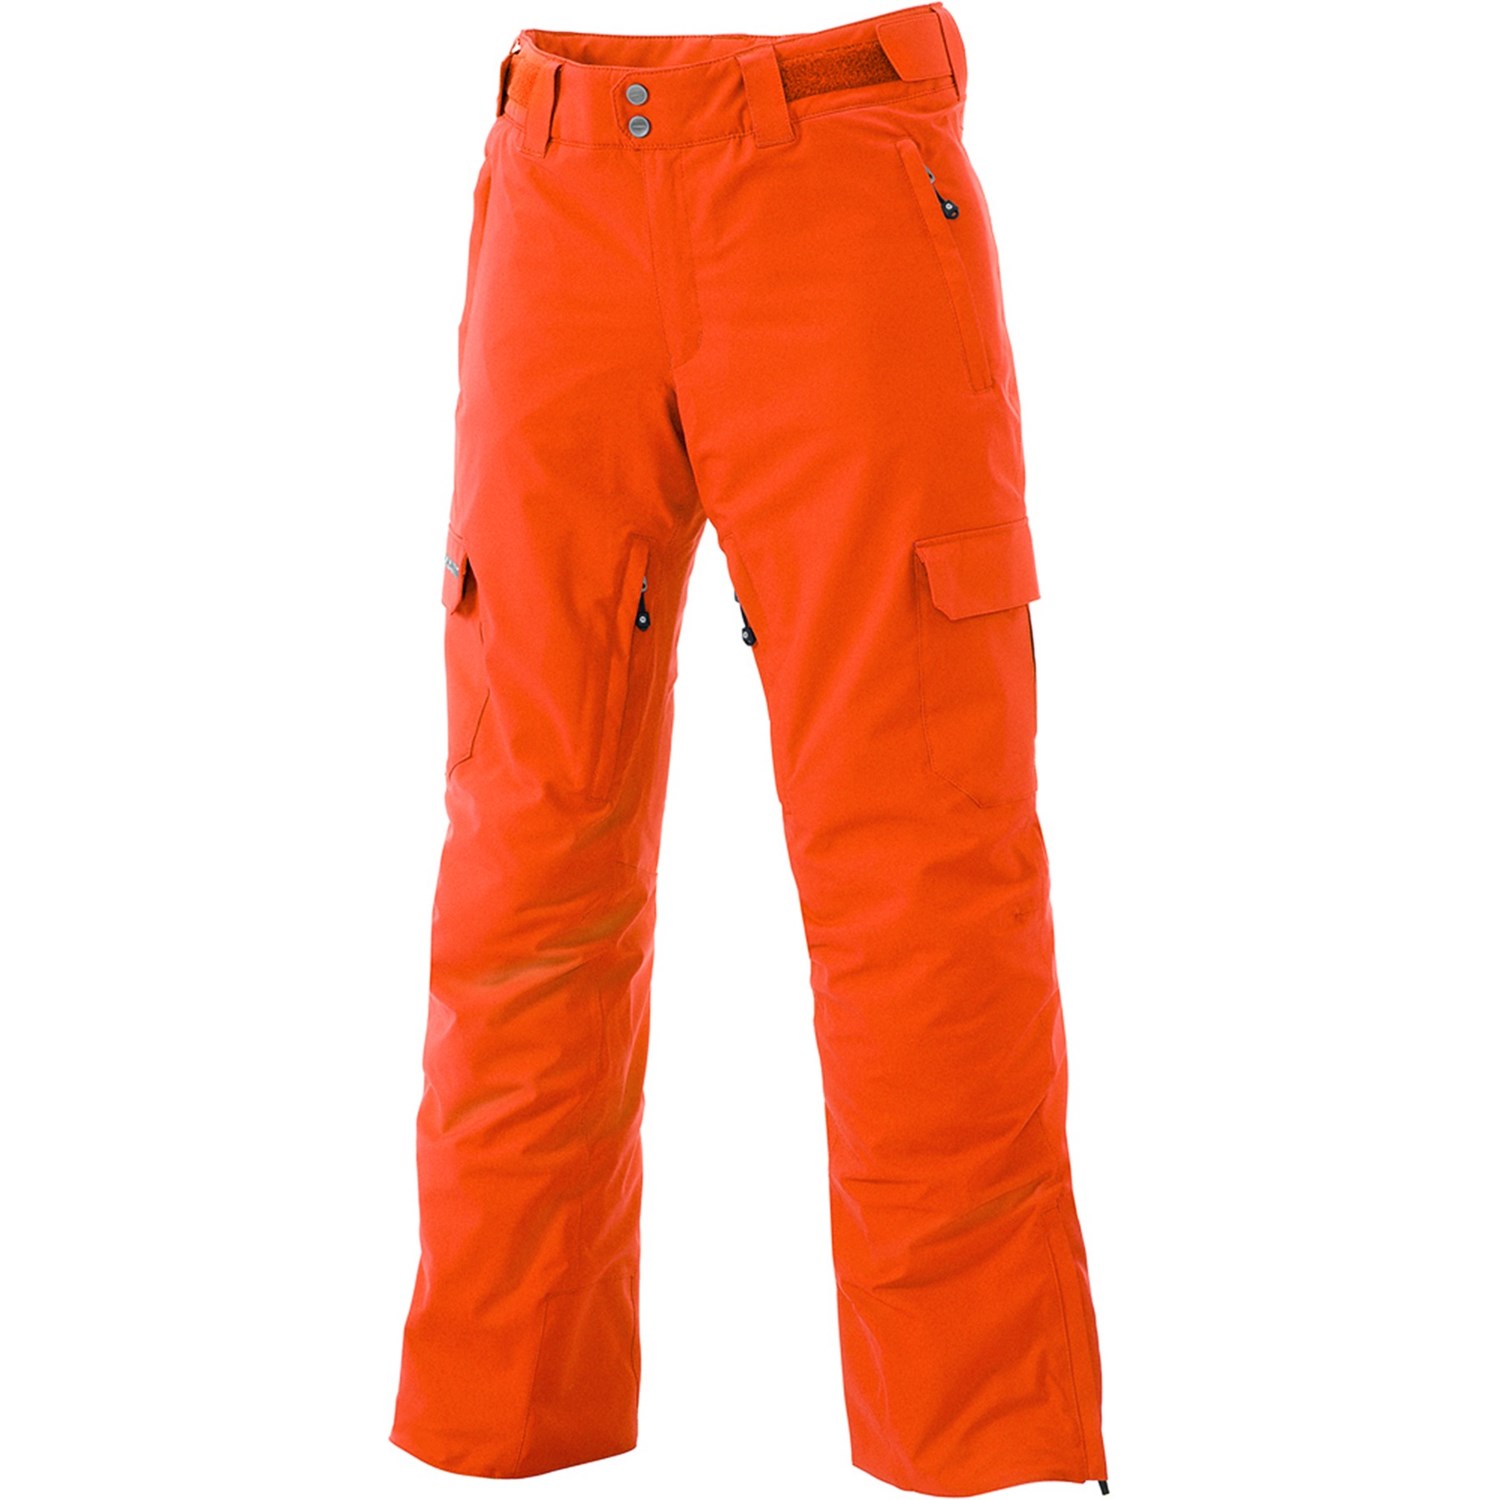 Goldwin Arashi Ski Pants- Insulated (For Men) 6317P - Save 74%